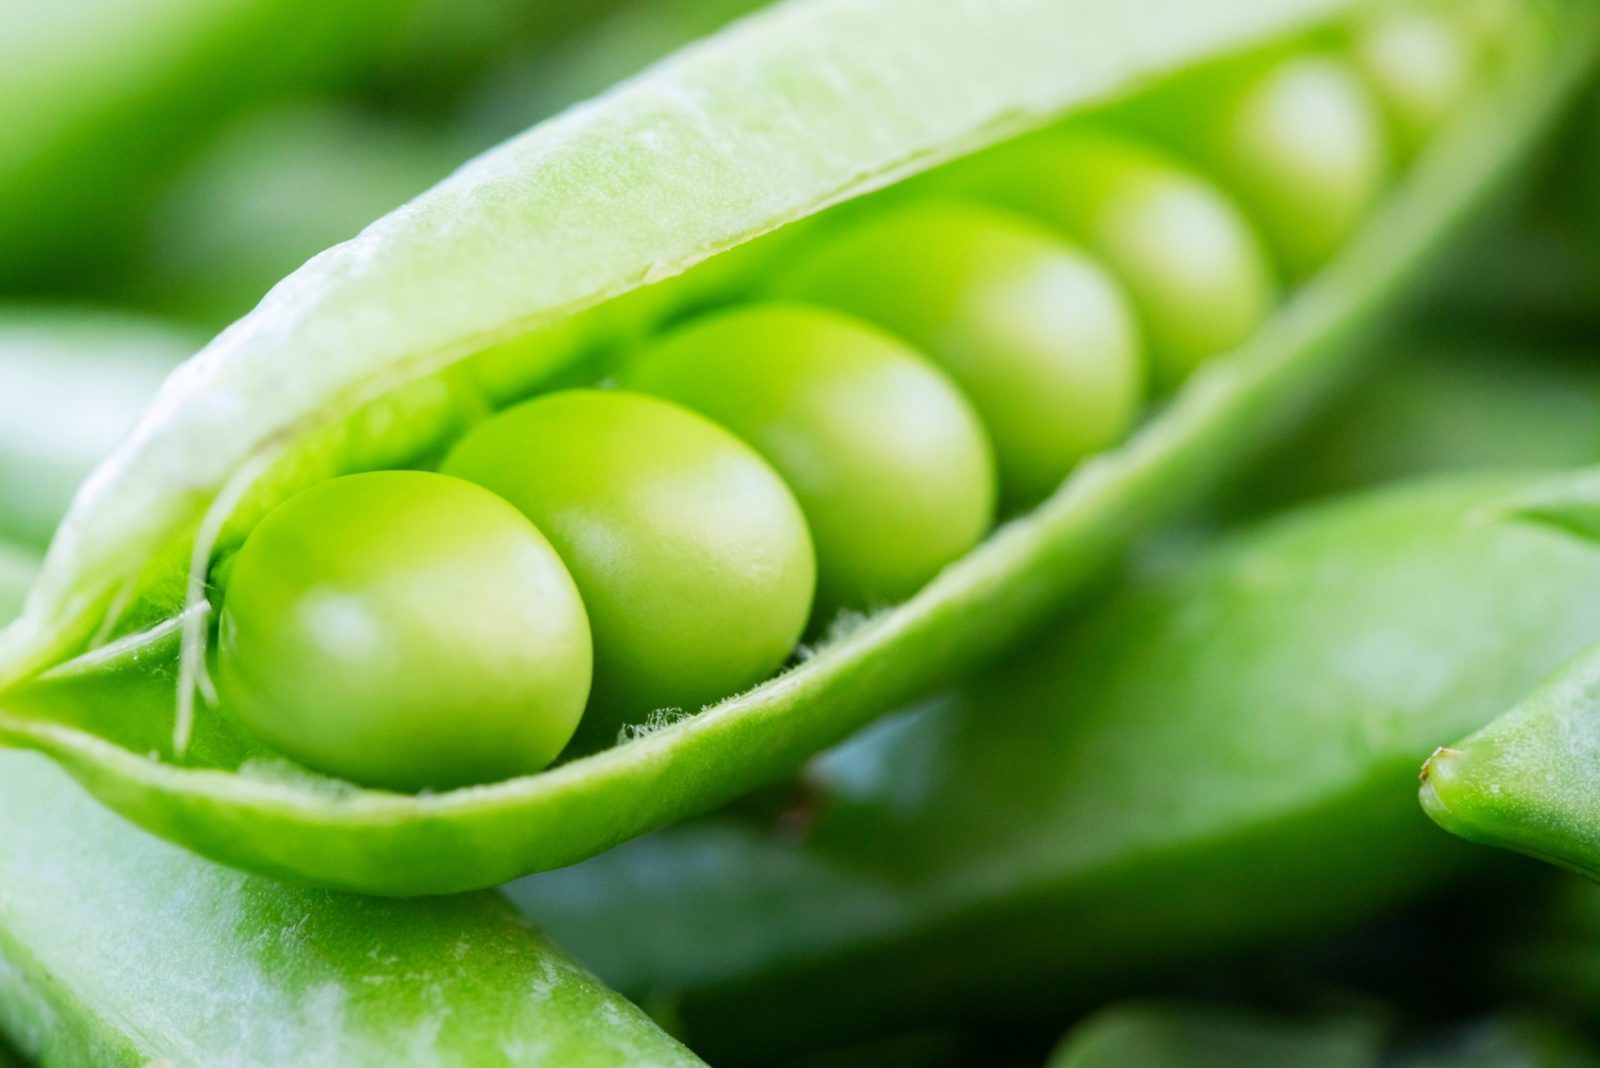 pod of green peas